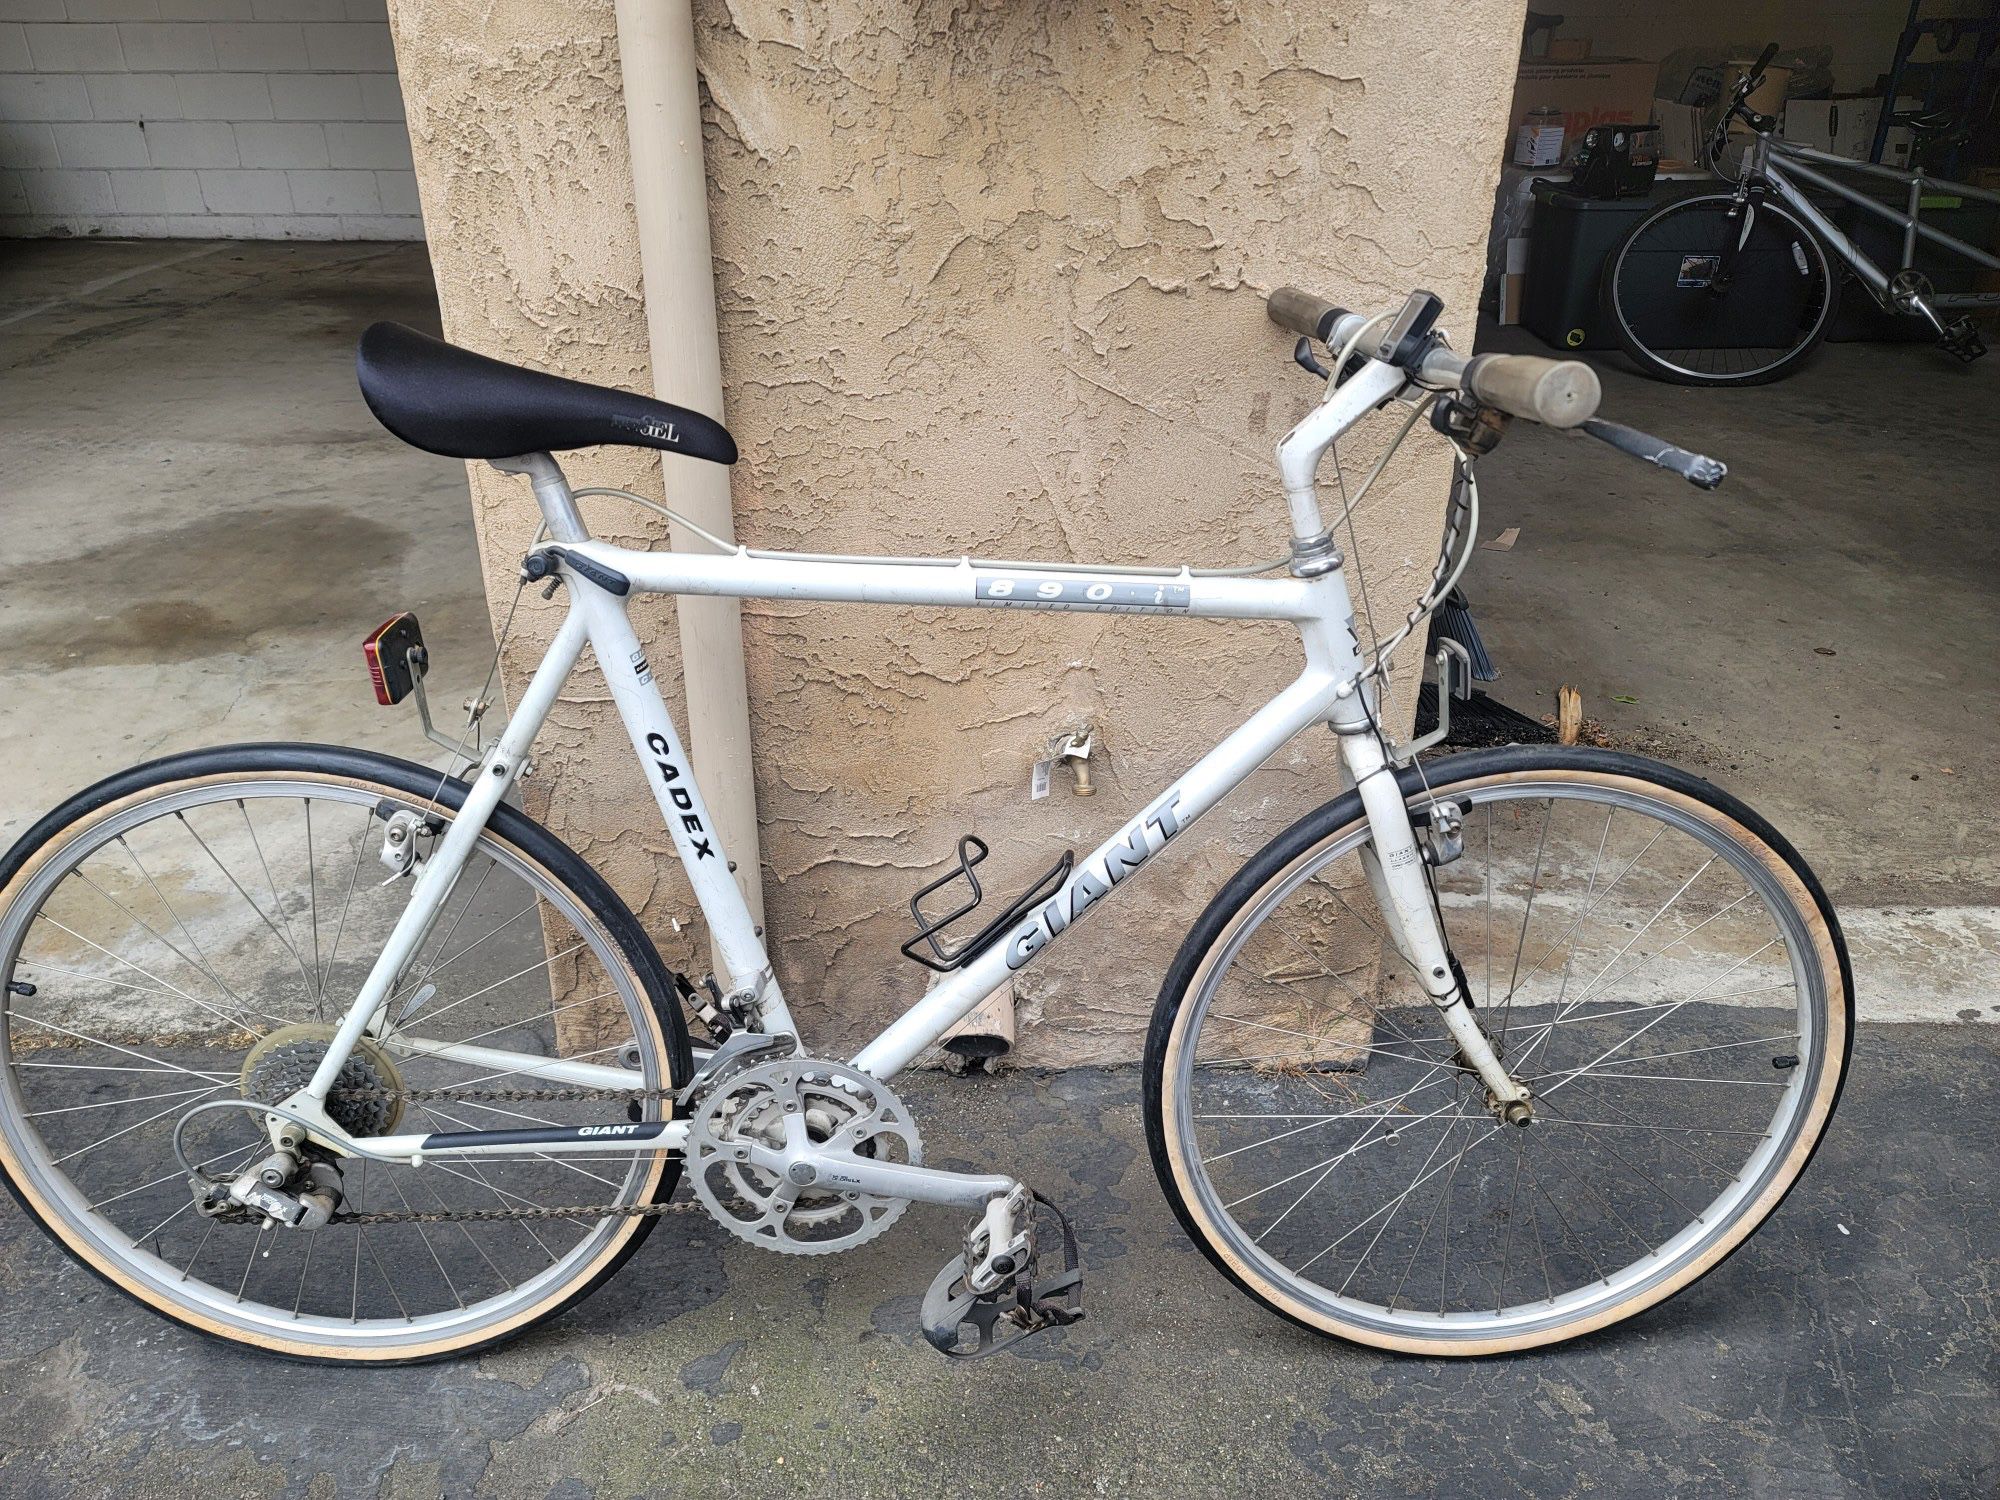 12 Speed Bicycle Same Bike On eBay For $750